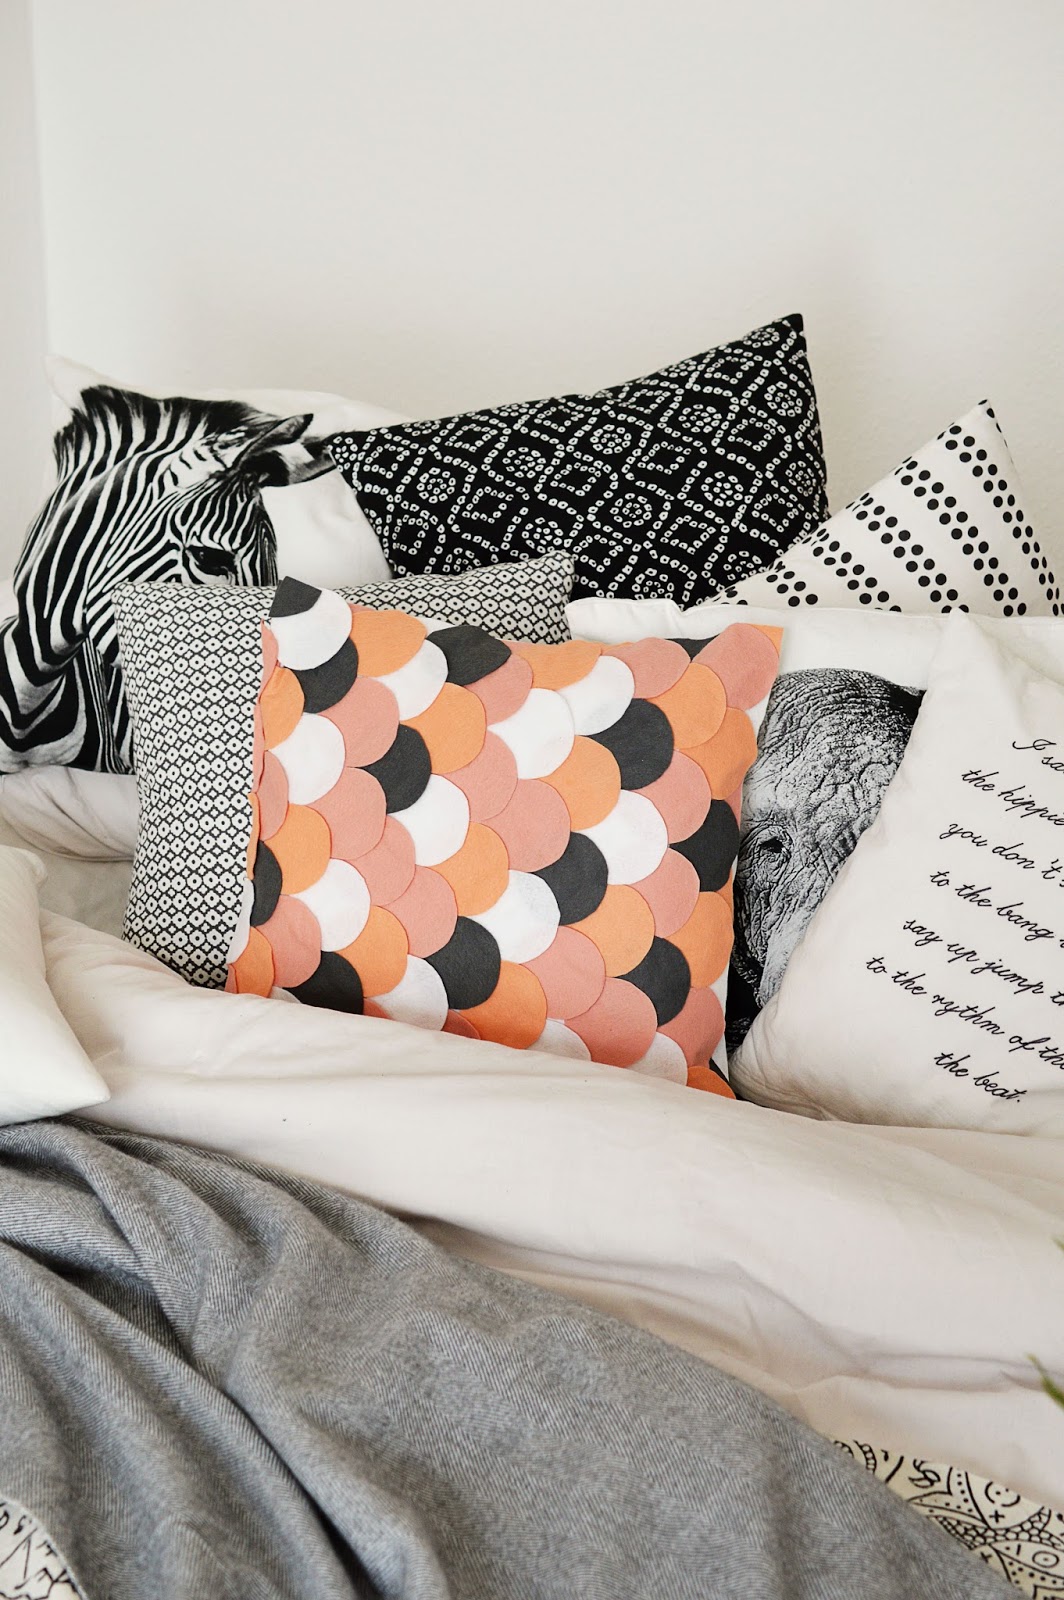 DIY No-Sew Scalloped Pillowcase | Motte's Blog